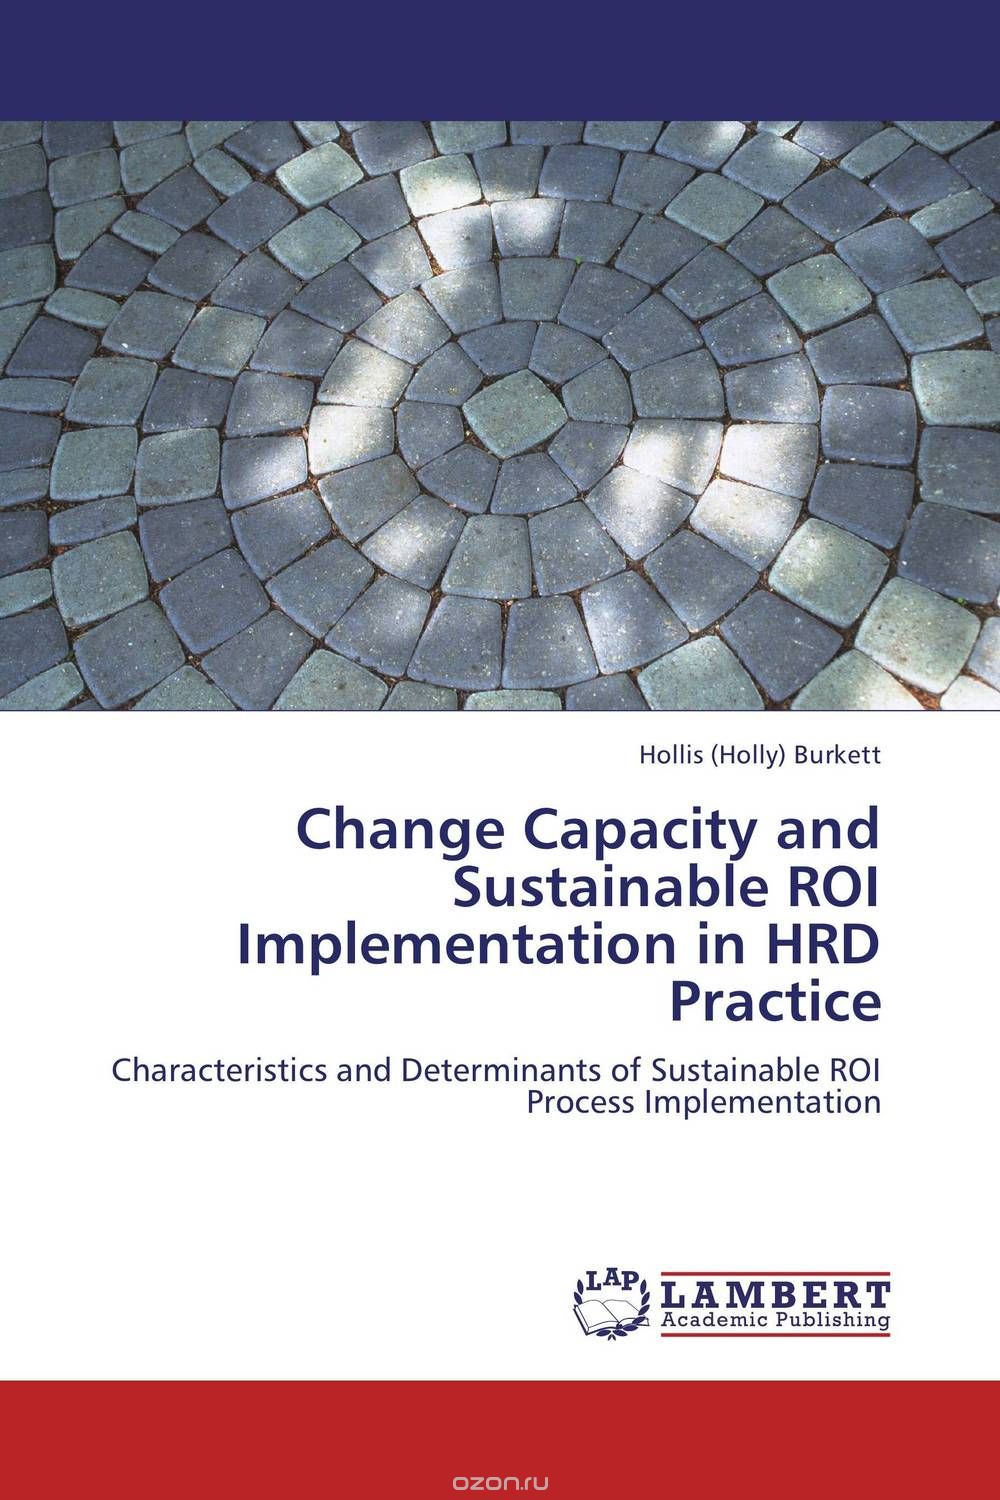 Скачать книгу "Change Capacity and Sustainable ROI Implementation in HRD Practice"